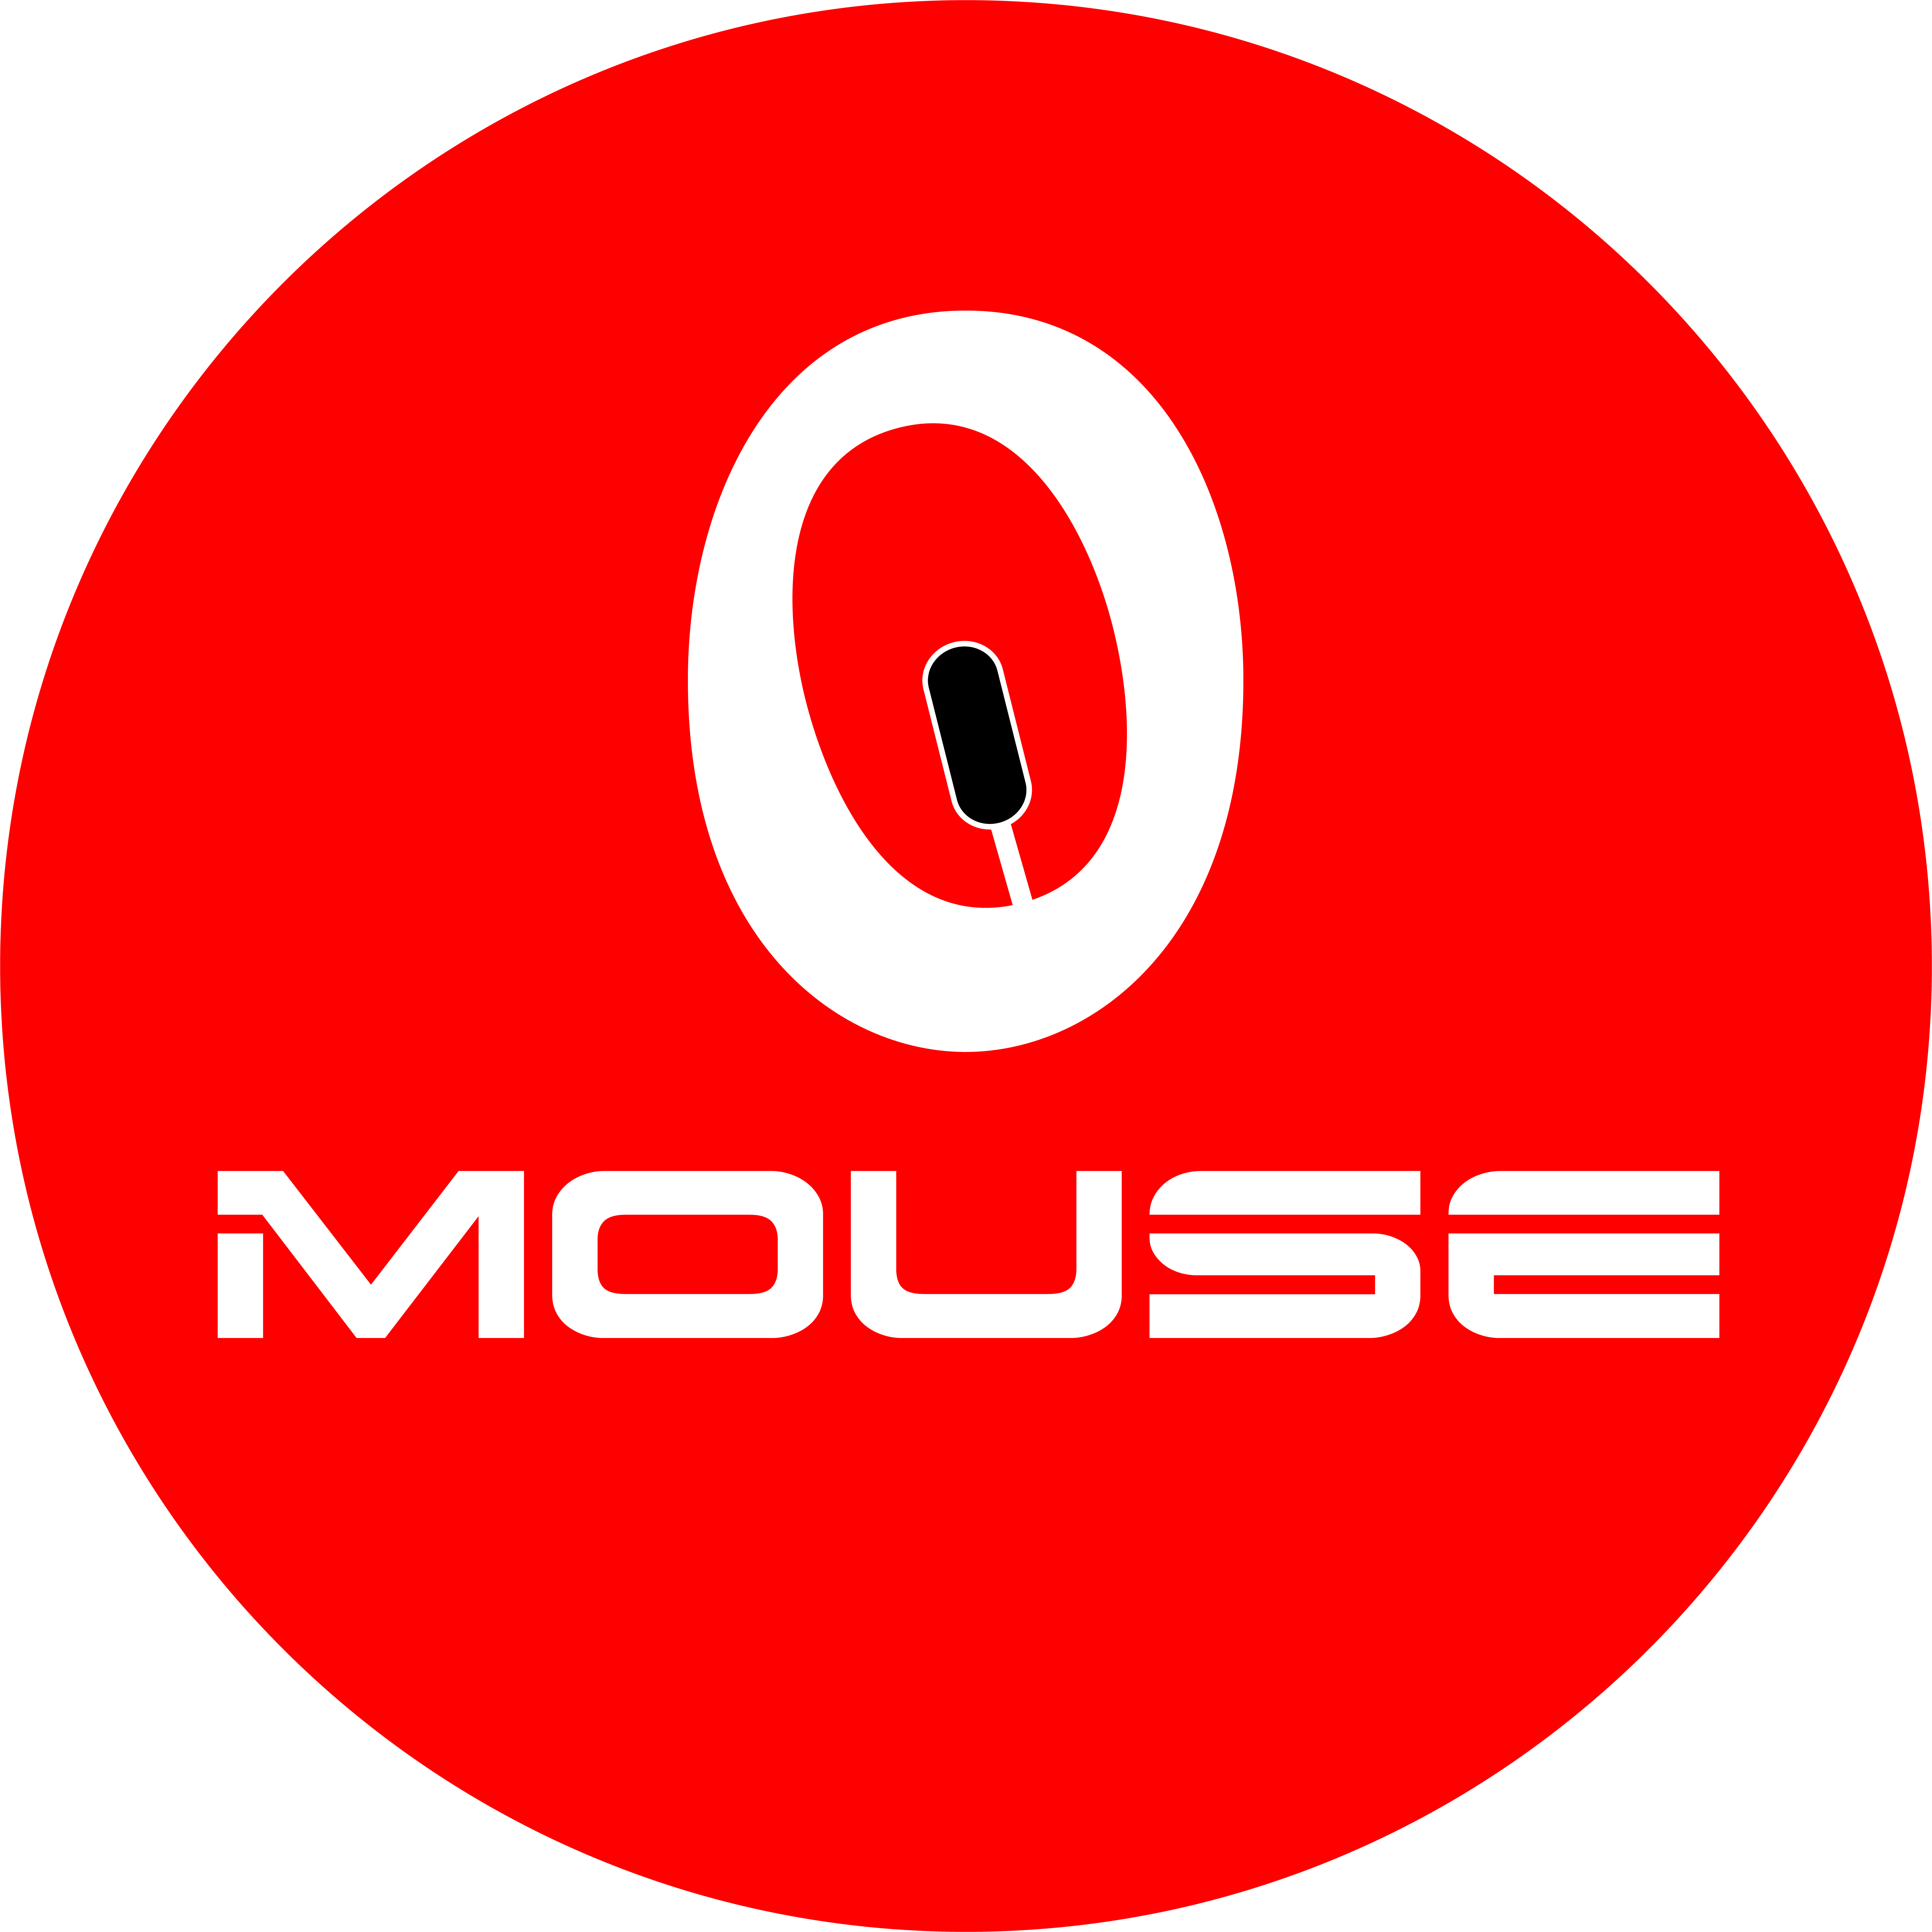 Mouse SRL